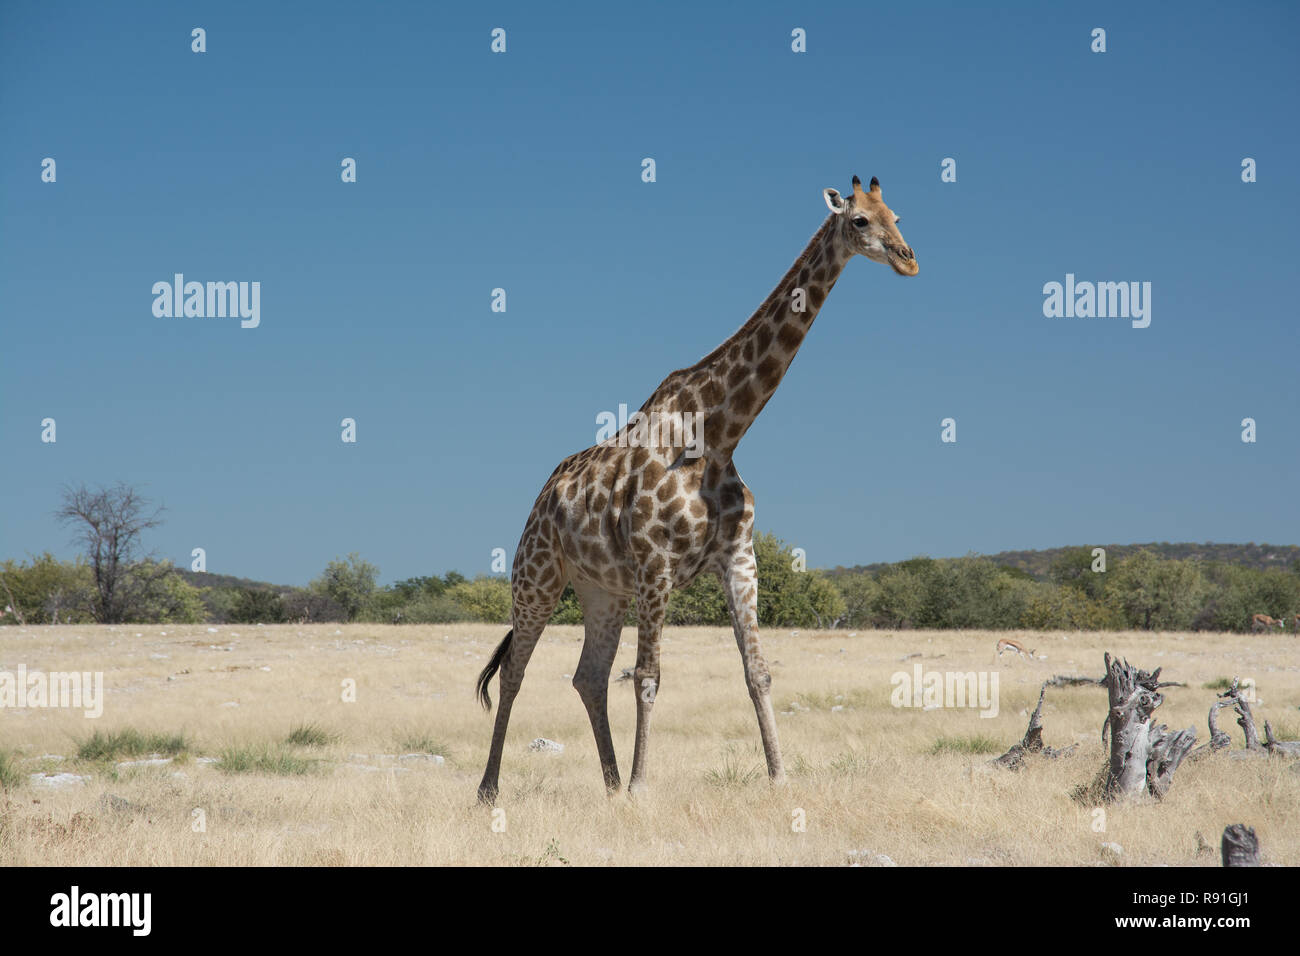 Giraffes in their Natural habitat Stock Photo